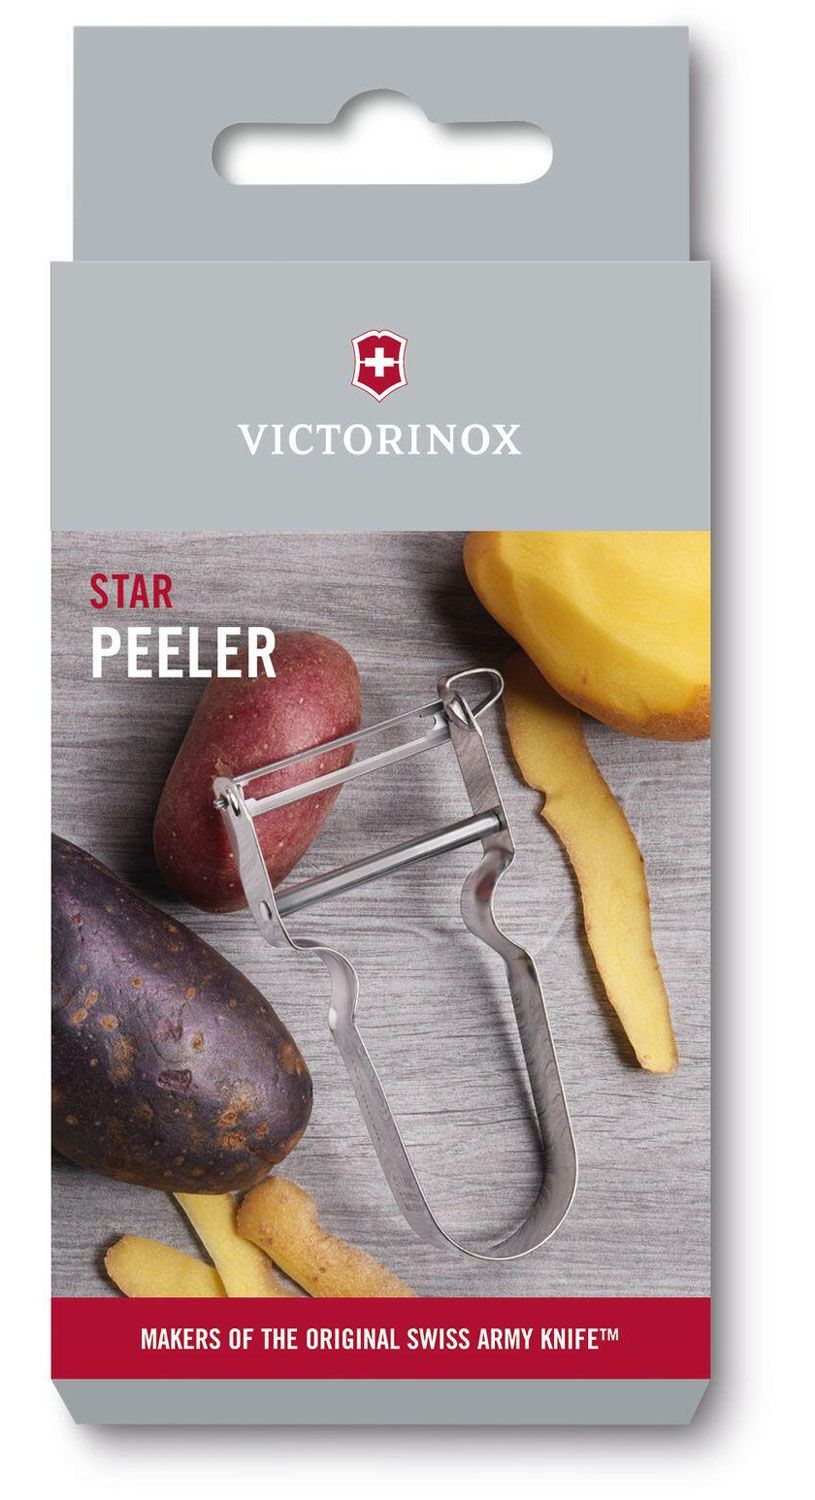 Genuine Victorinox vegetable peeler potato fruit and vegetable